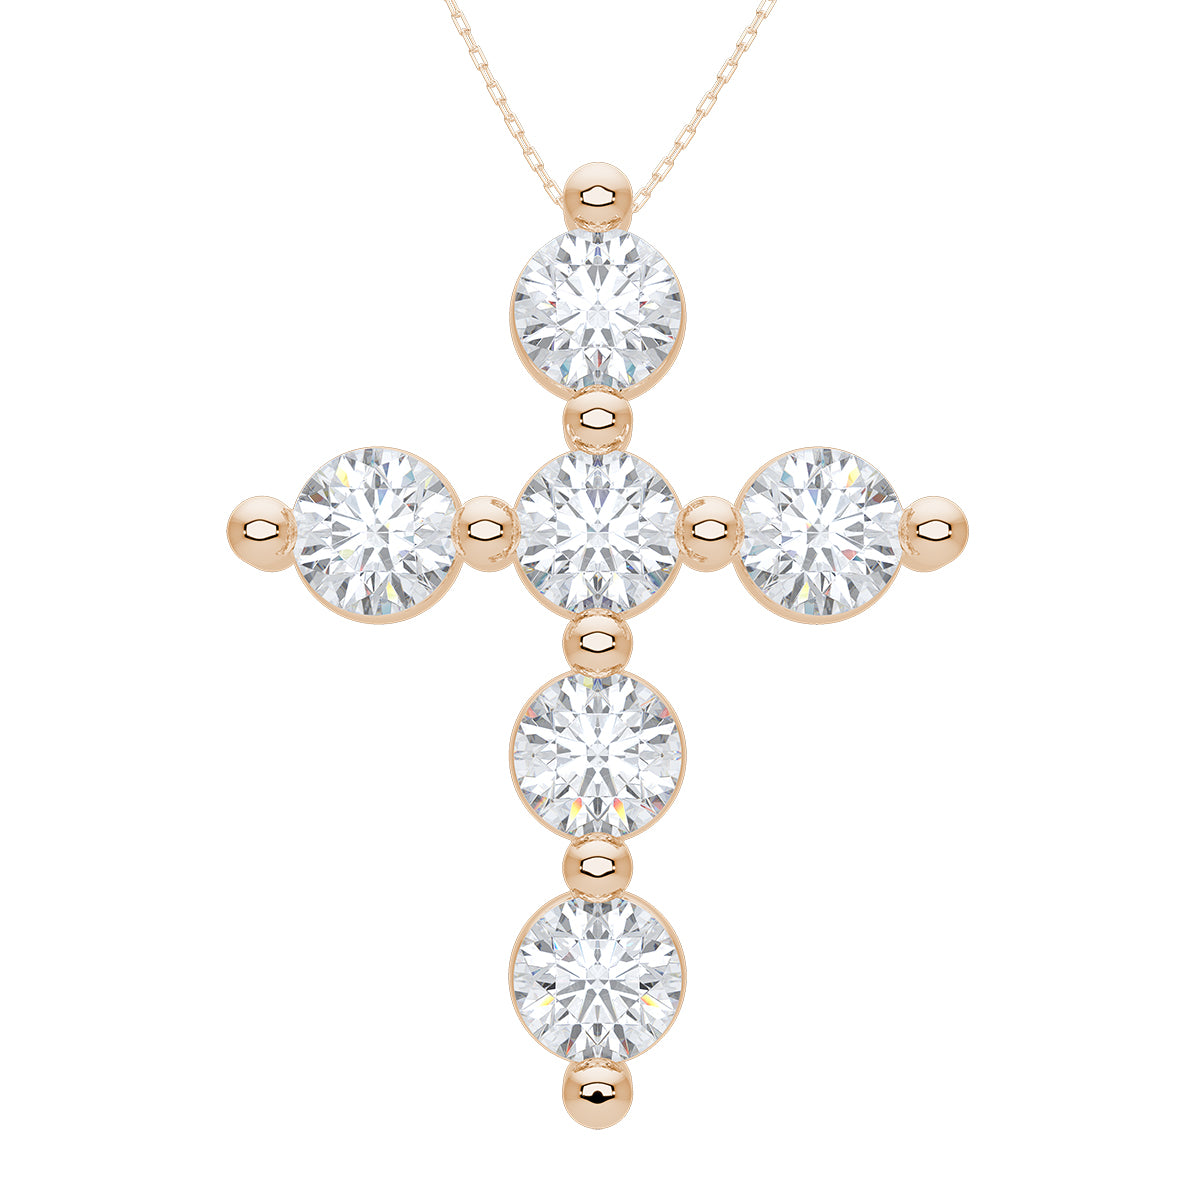 Mamas Charlie Cloud® Floating Diamond Cross Necklace 2.46 ctw